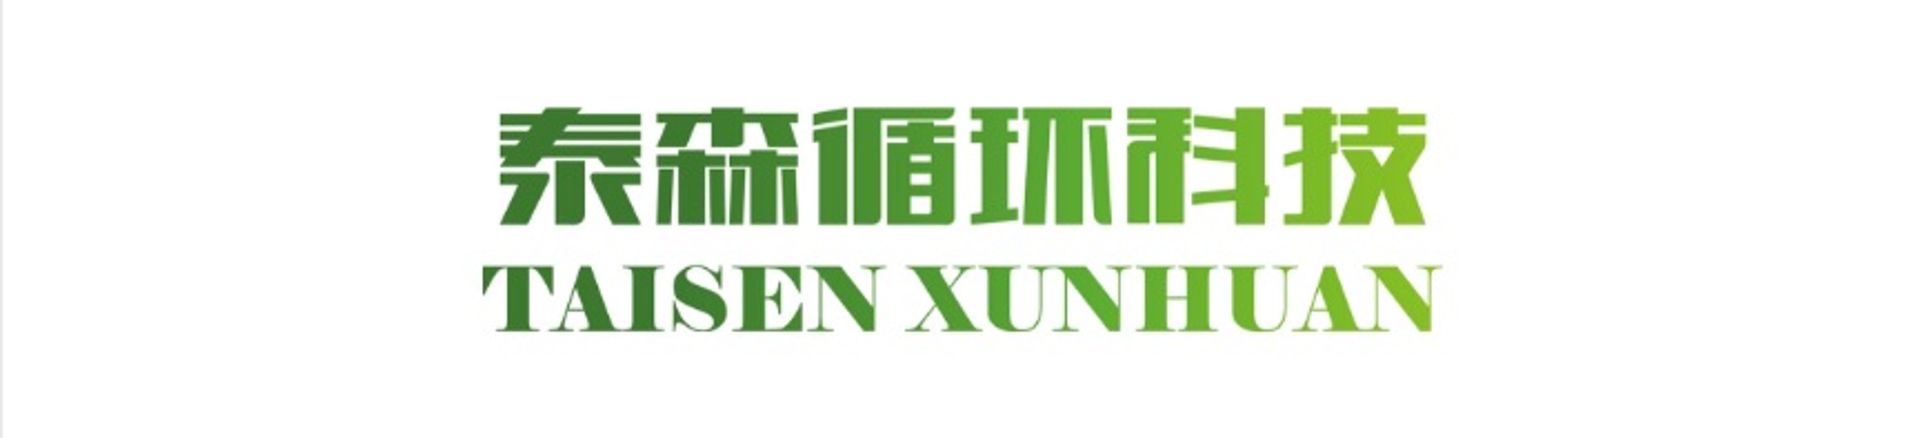 Anhua Taisen Recycling Technology Co. Ltd.